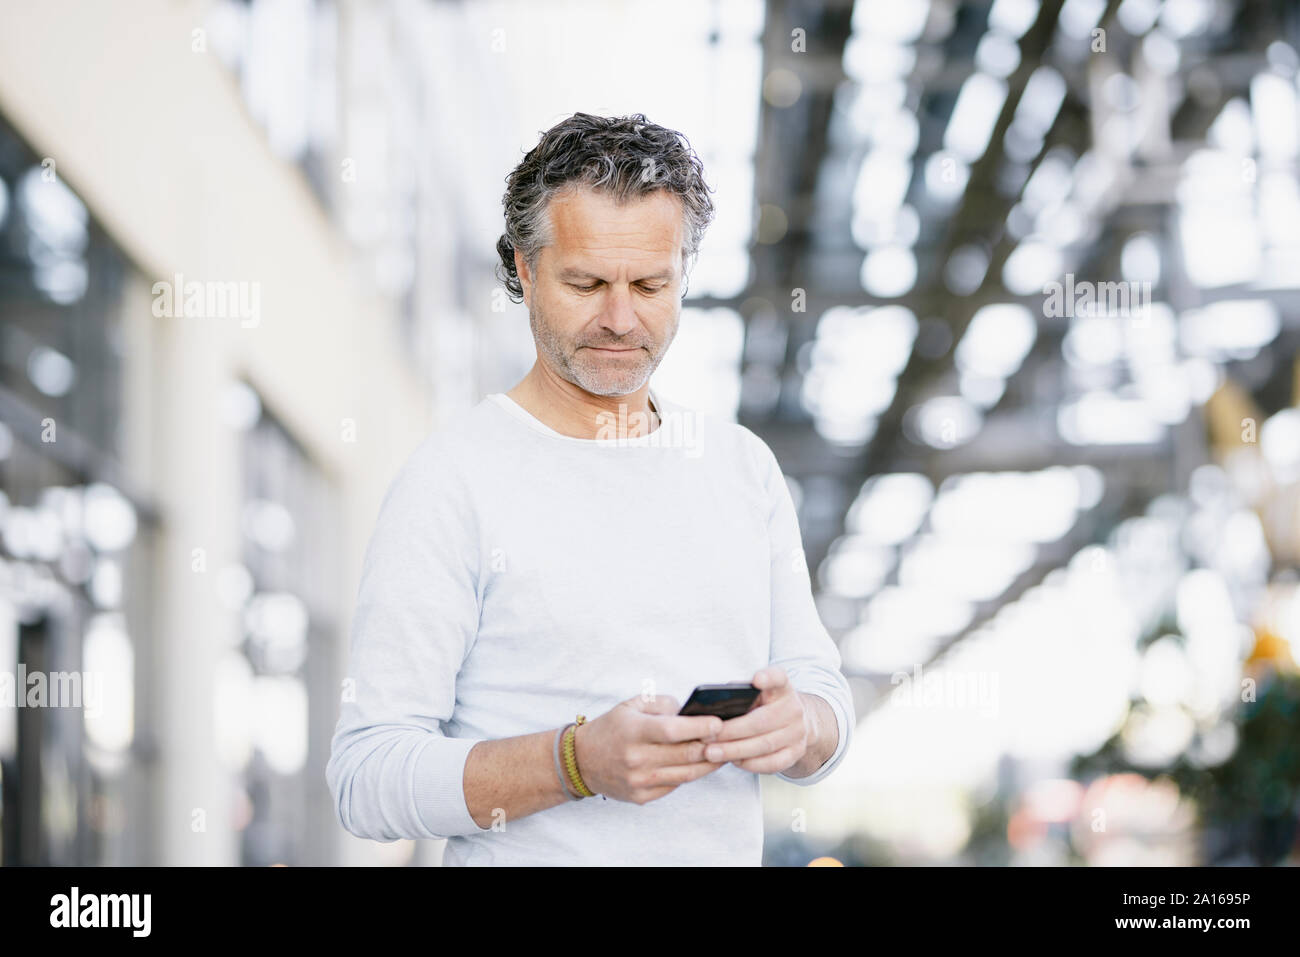 Portrait of mature man using smartphone Stock Photo